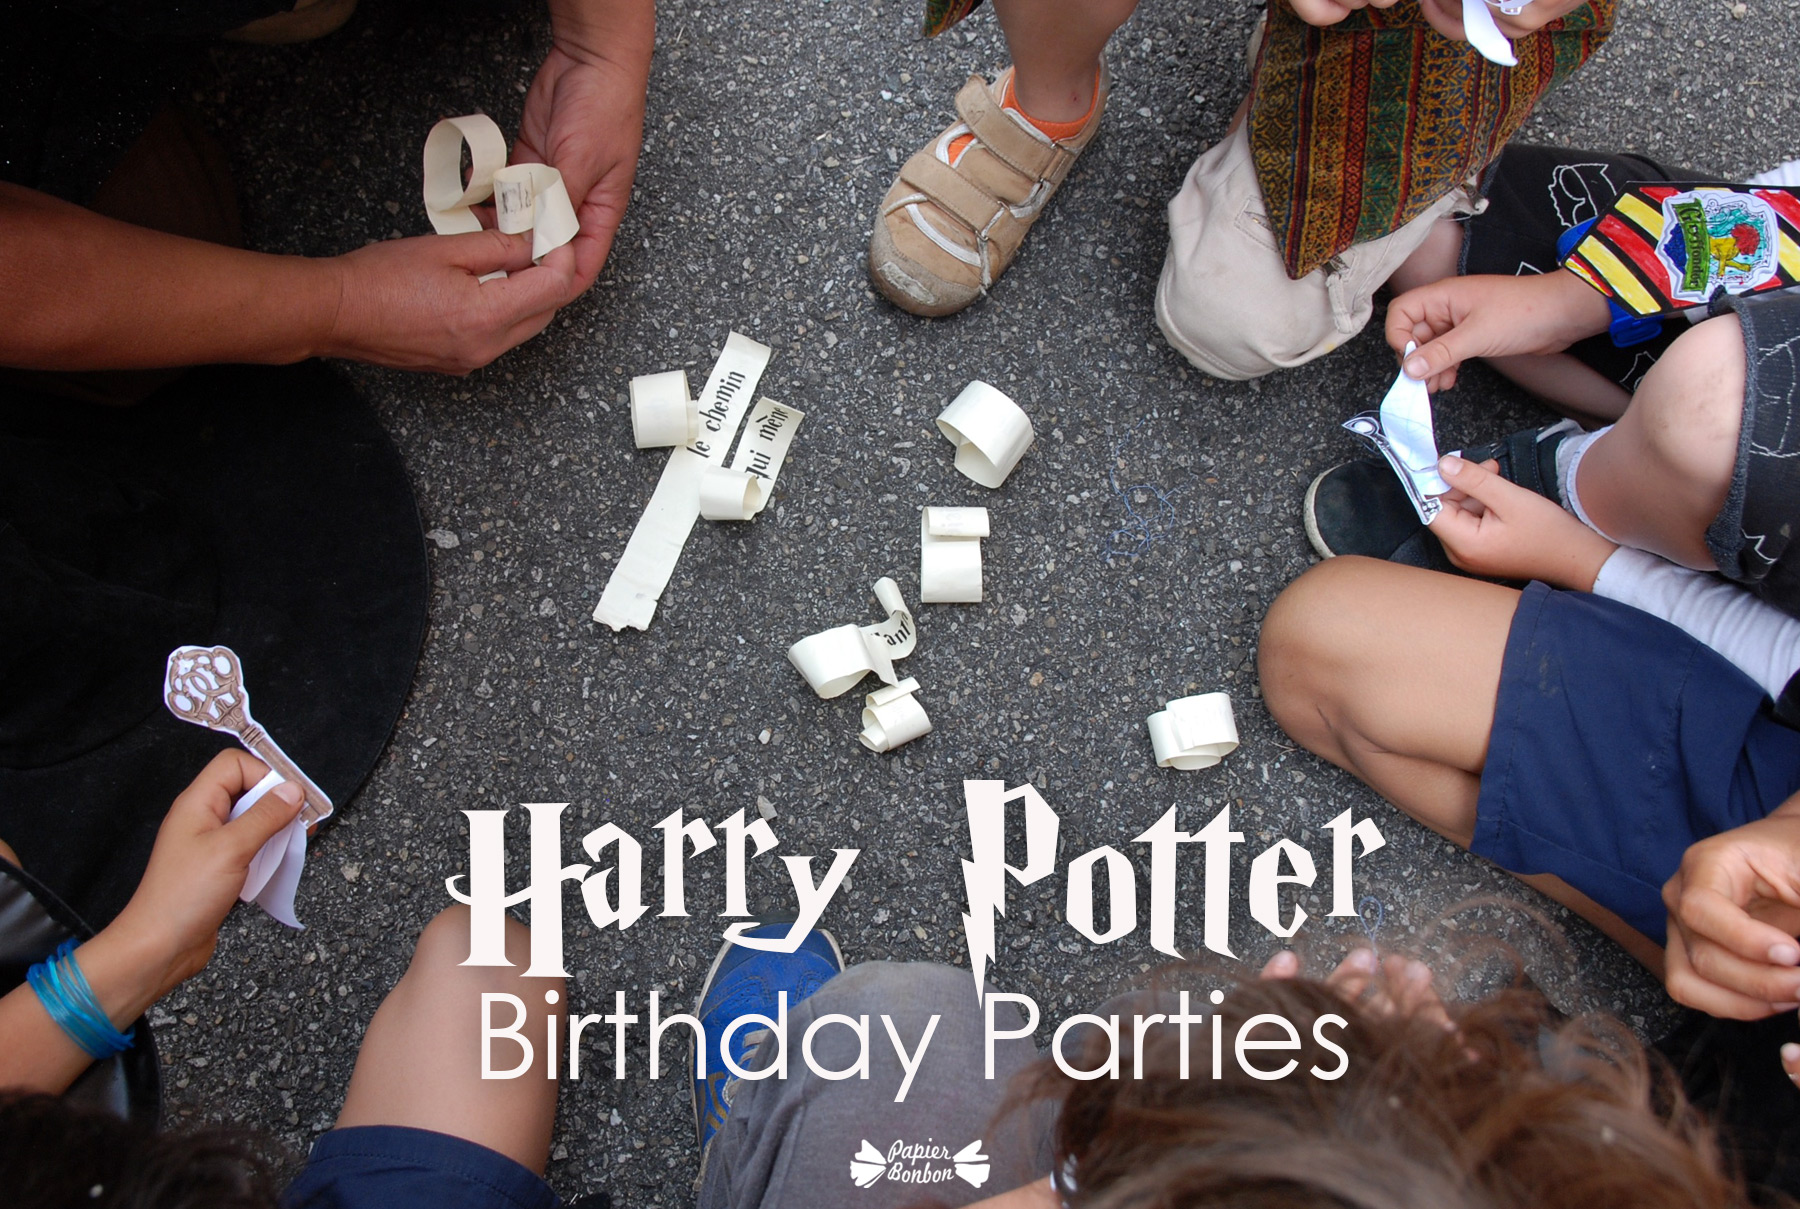 Harry Potter Birthday parties - Printables - Papier Bonbon